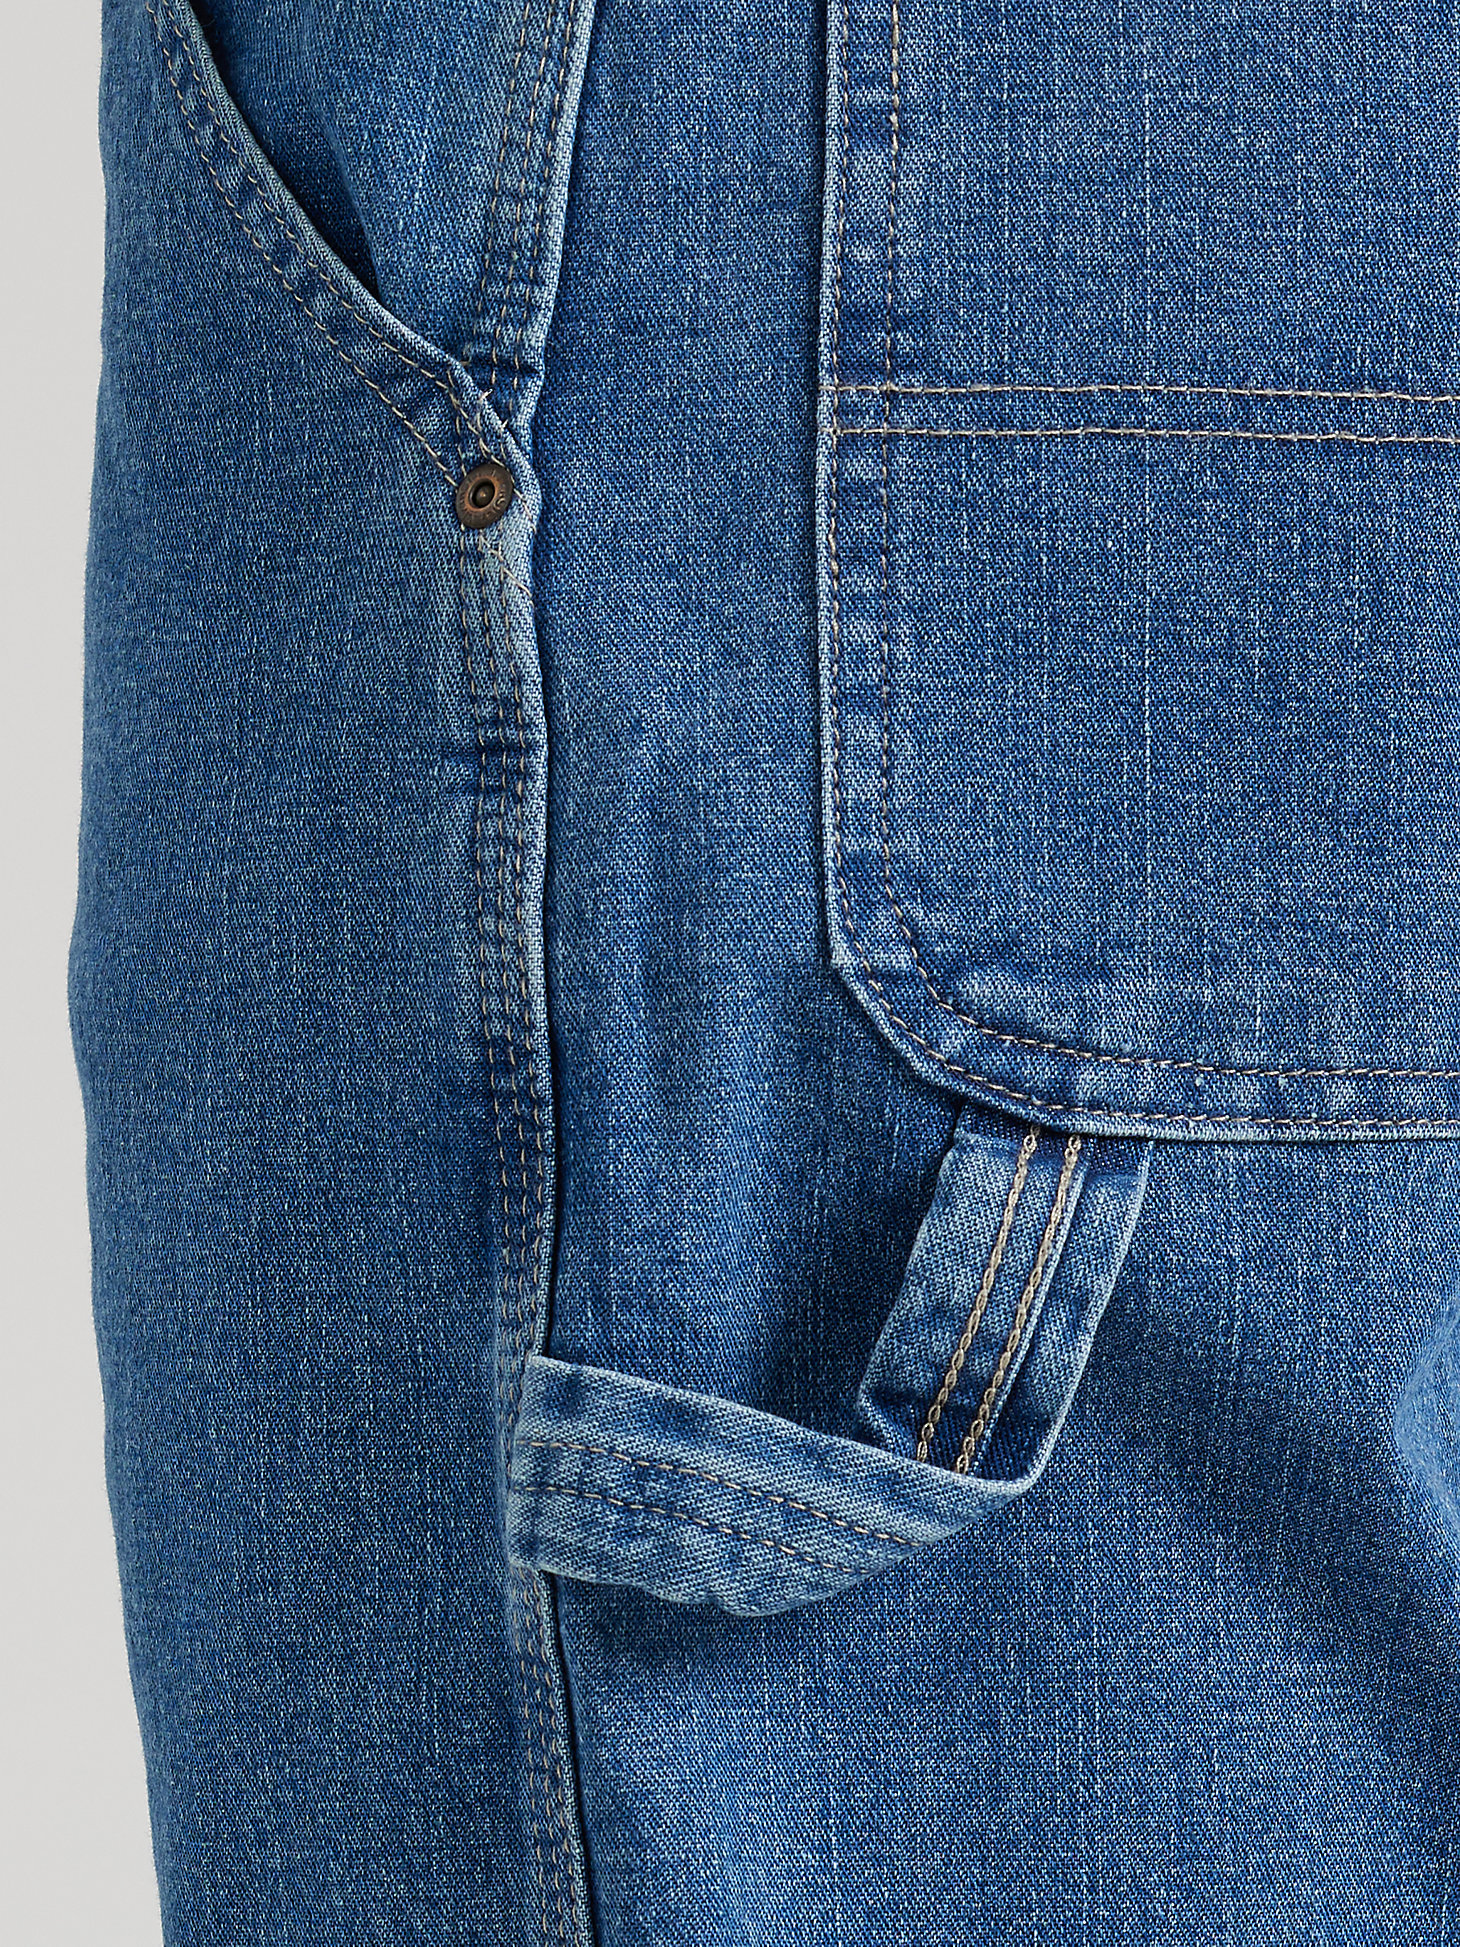 Wrangler® Men's Five Star Premium Carpenter Jean in Mid Indigo alternative view 5